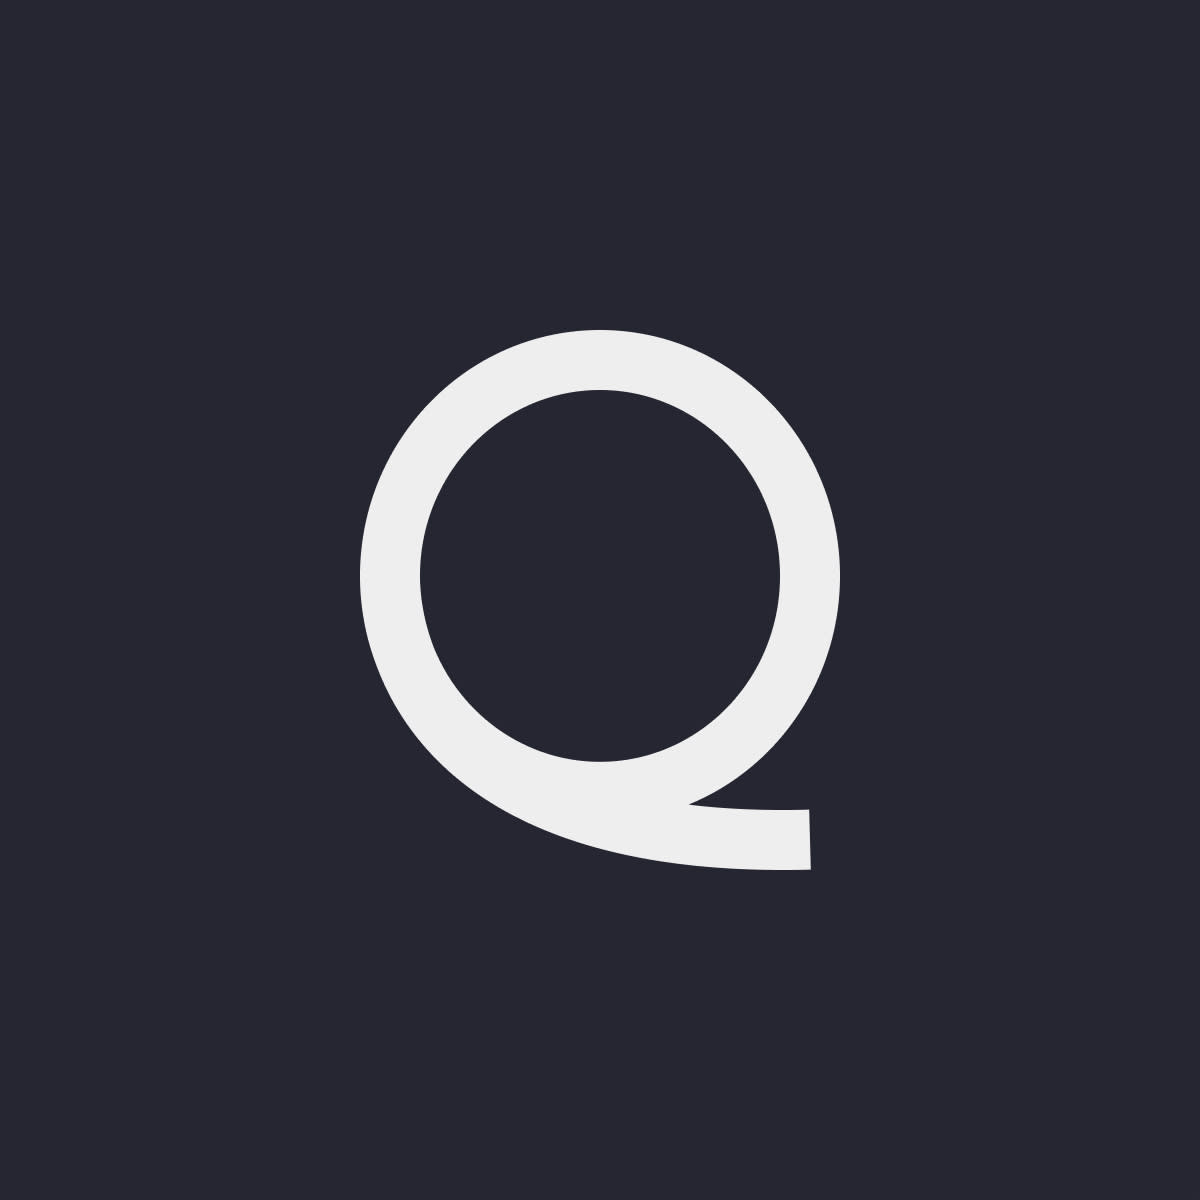 Qatalog's logo